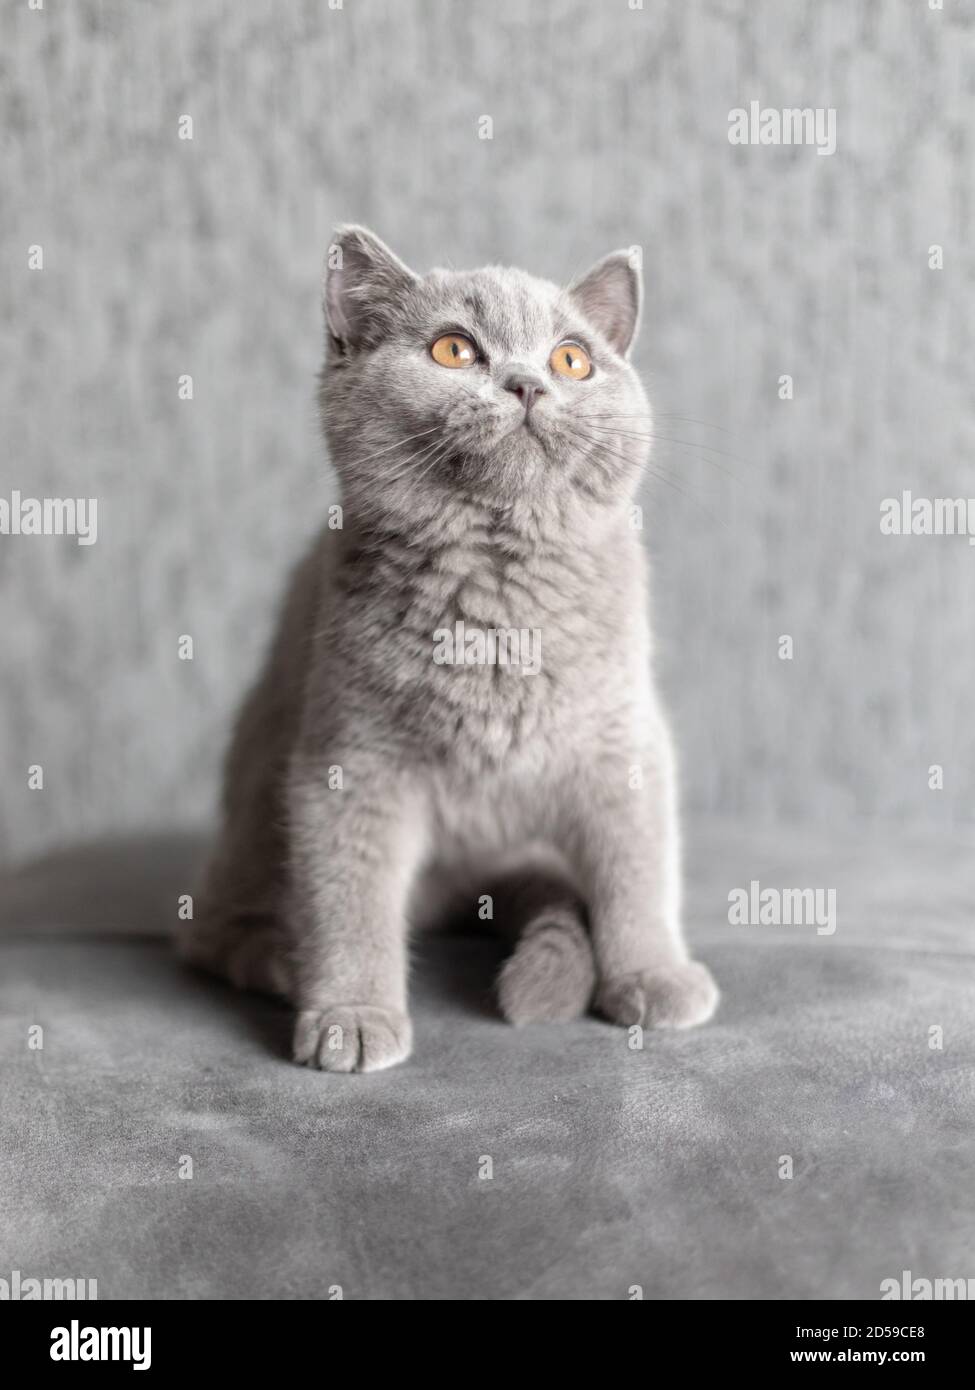 Portrait of a British Shorthair blue kitten sitting on carpet Stock Photo